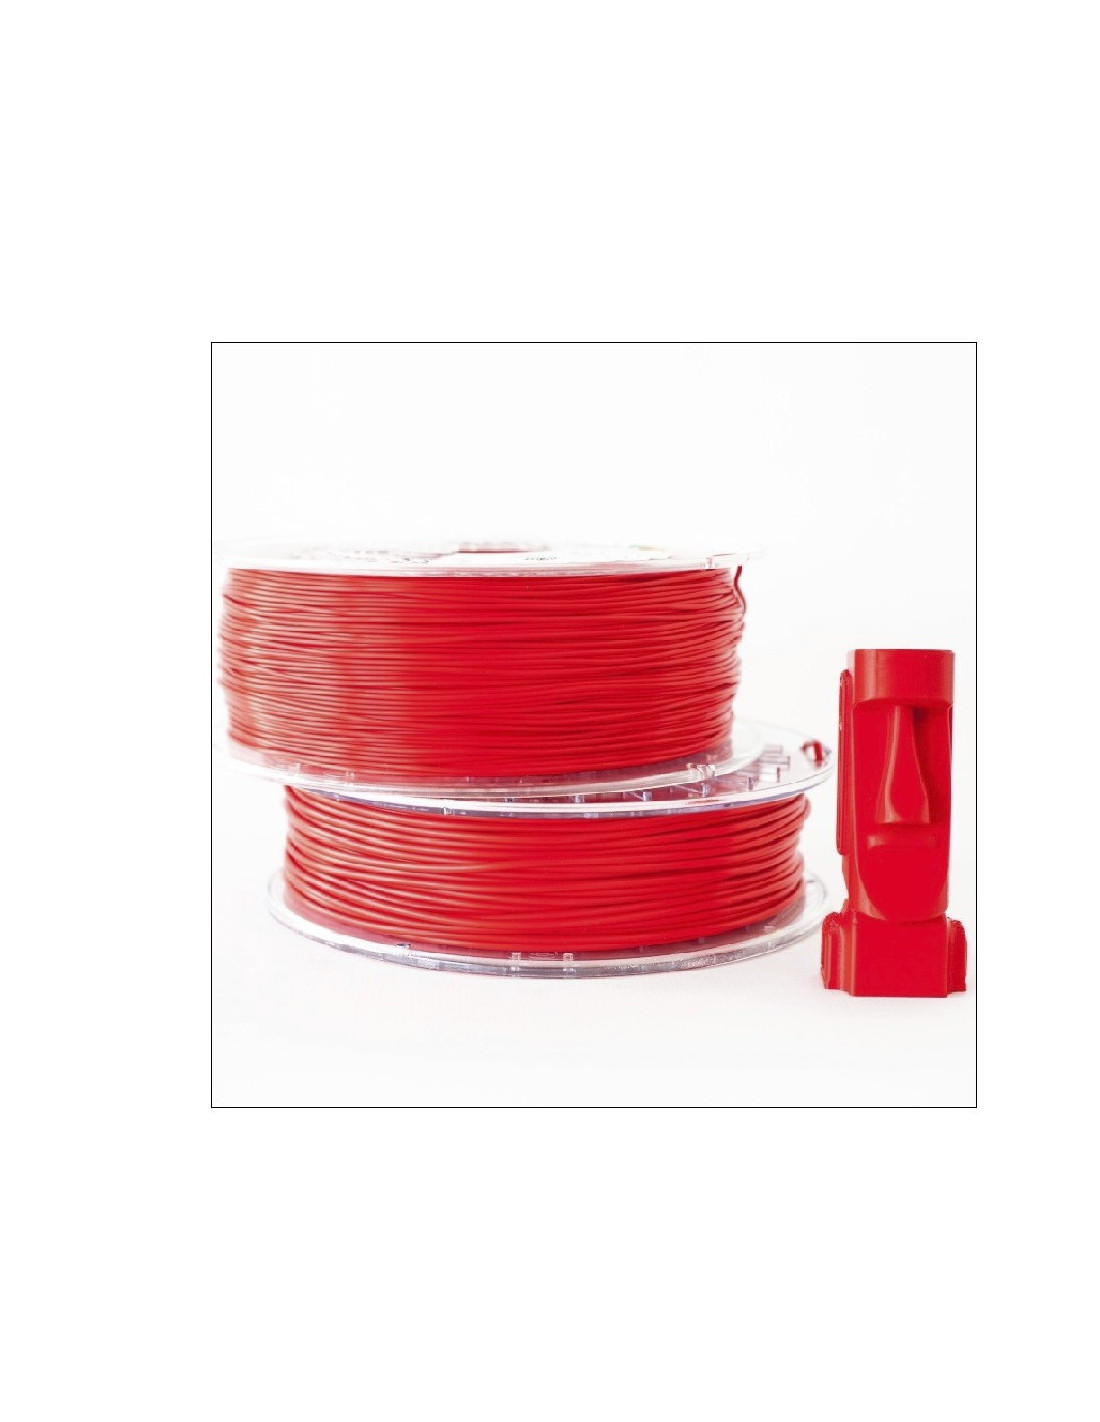 Filamento PLA de Smartfil 1,75 mm (0,75Kg) - Ruby